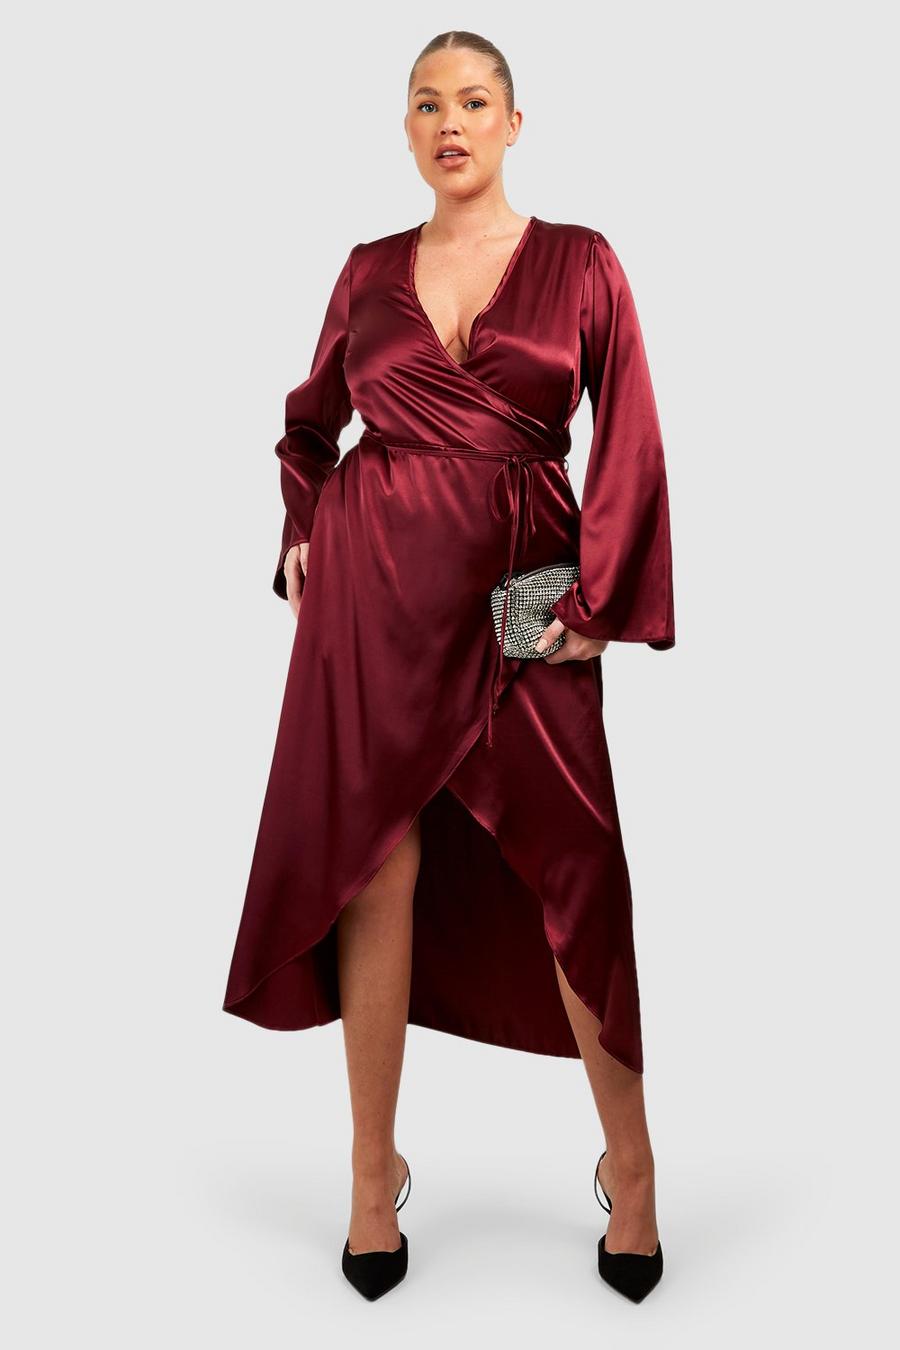 Burgundy Satin Long Sleeve Wrap Dress. Dresses